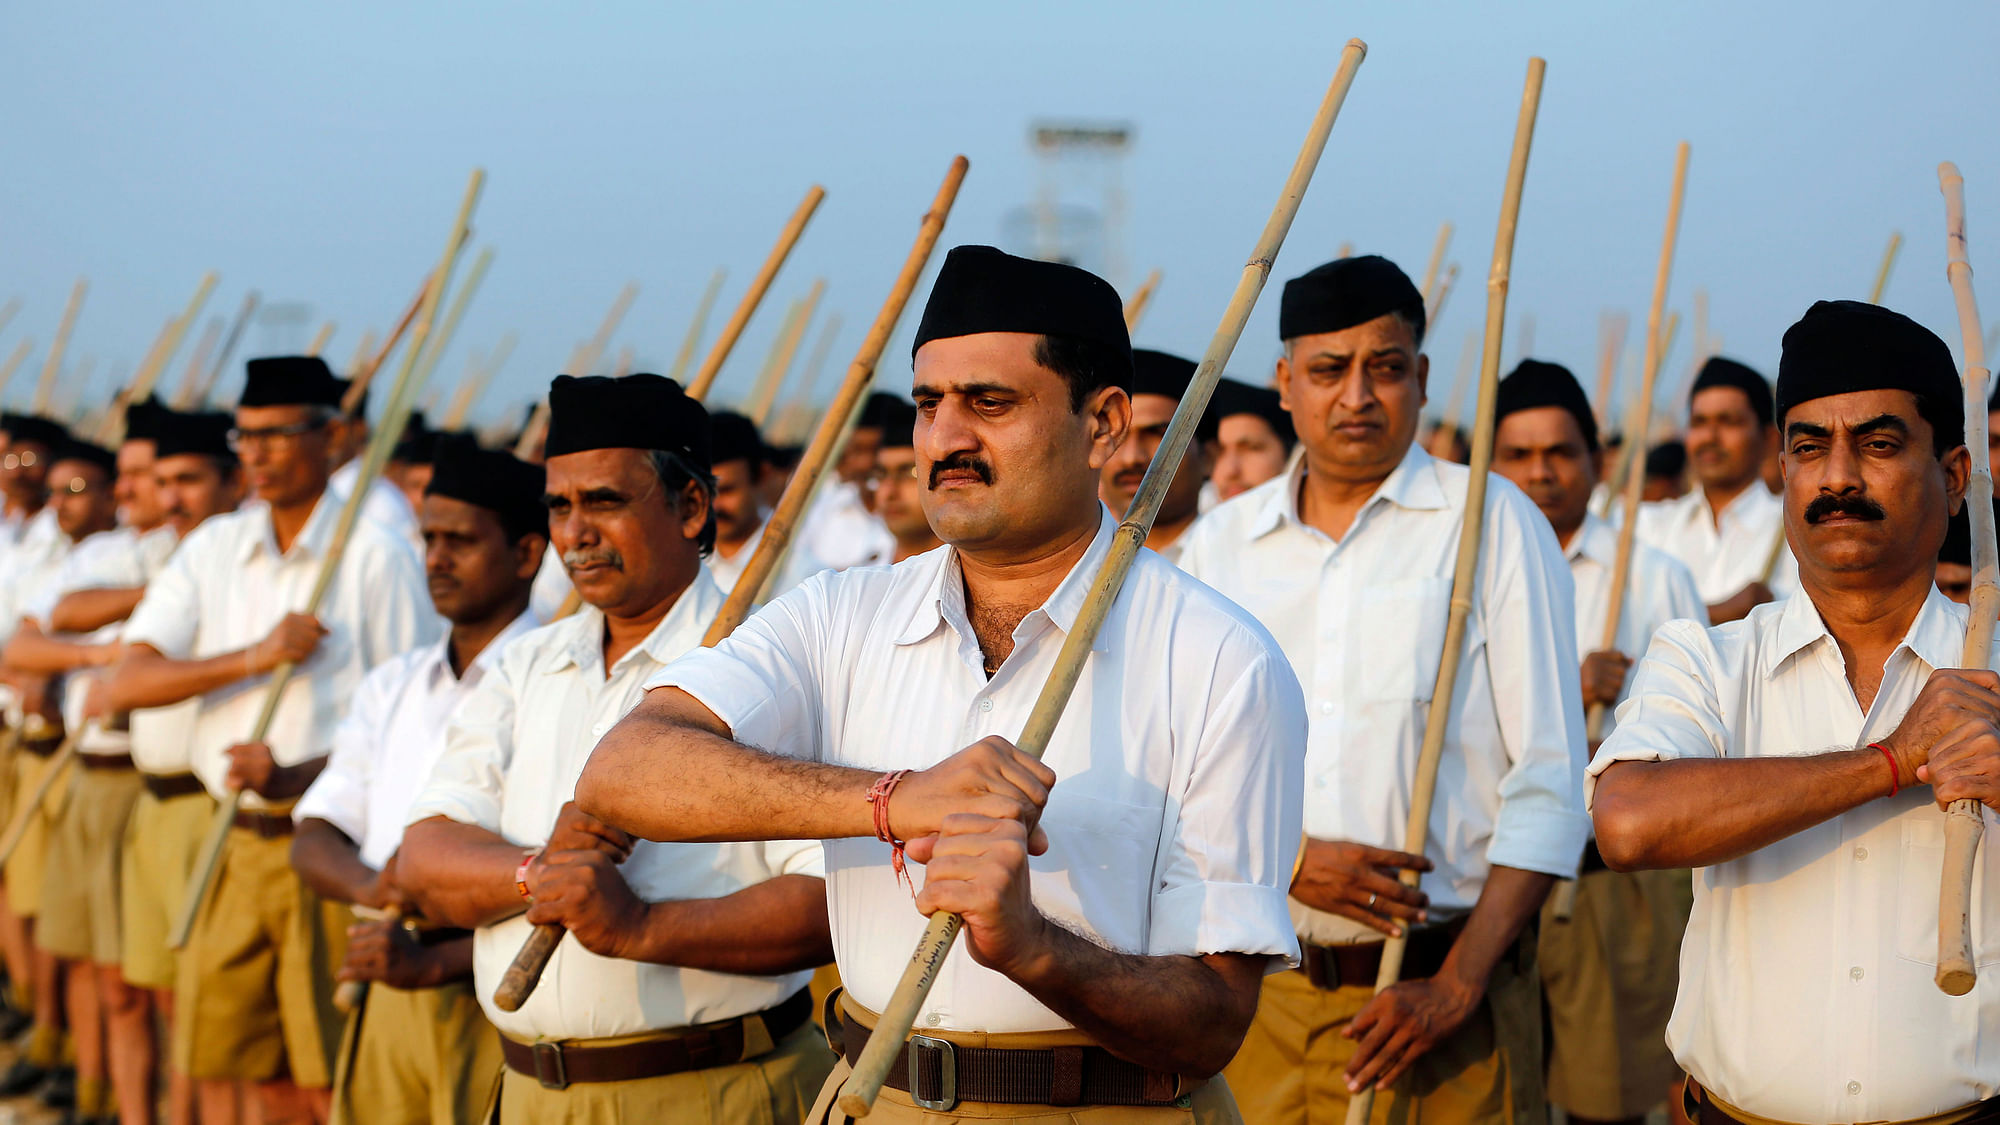 Volunteers of the Hindu nationalist organisation Rashtriya Swayamsevak Sangh (RSS) take part in a drill during their workers’ meet in Ahmedabad. Image used for representational purposes only.